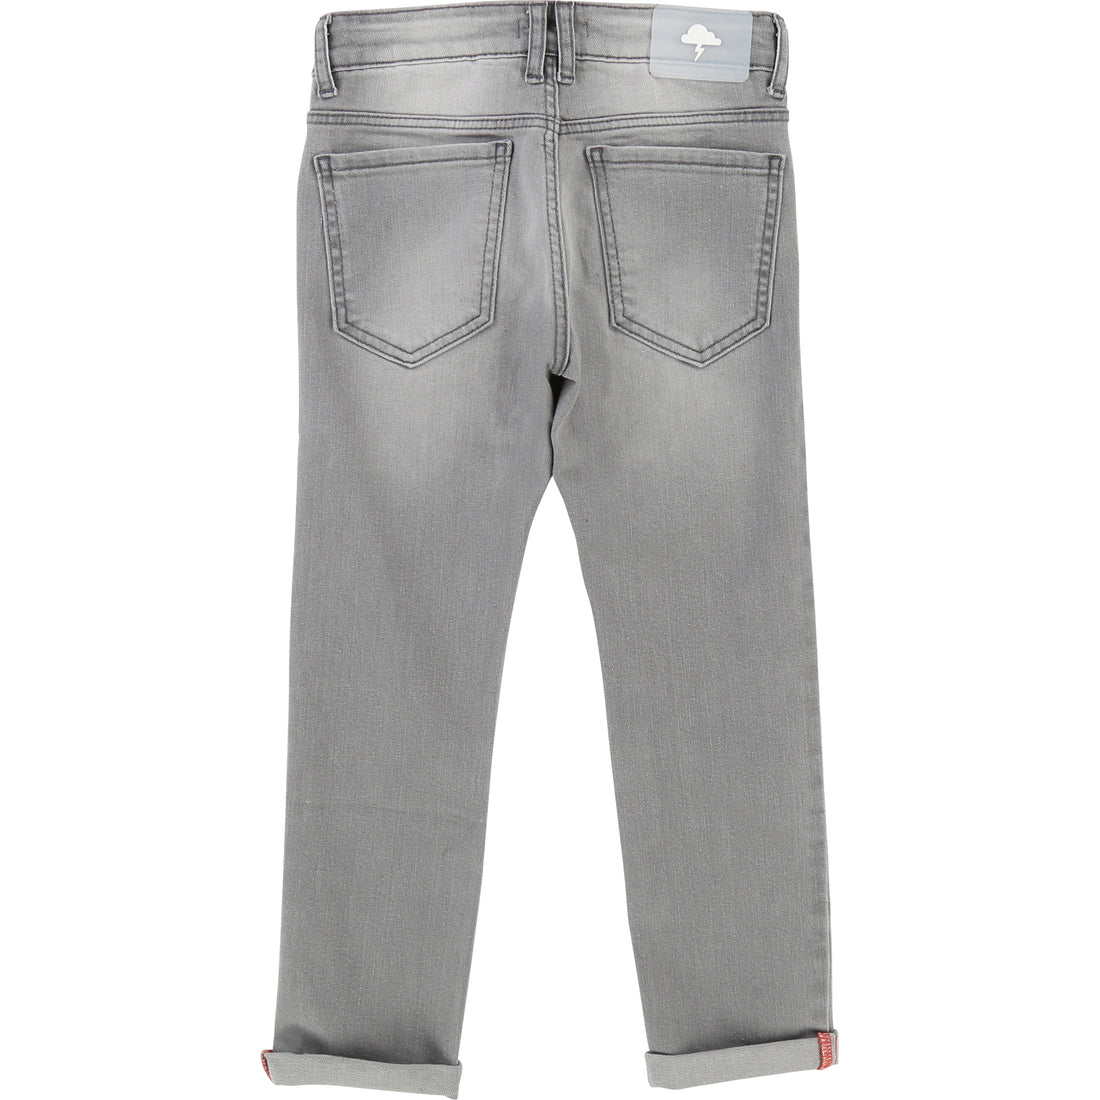 Billybandit Grey Denim Patch Jeans